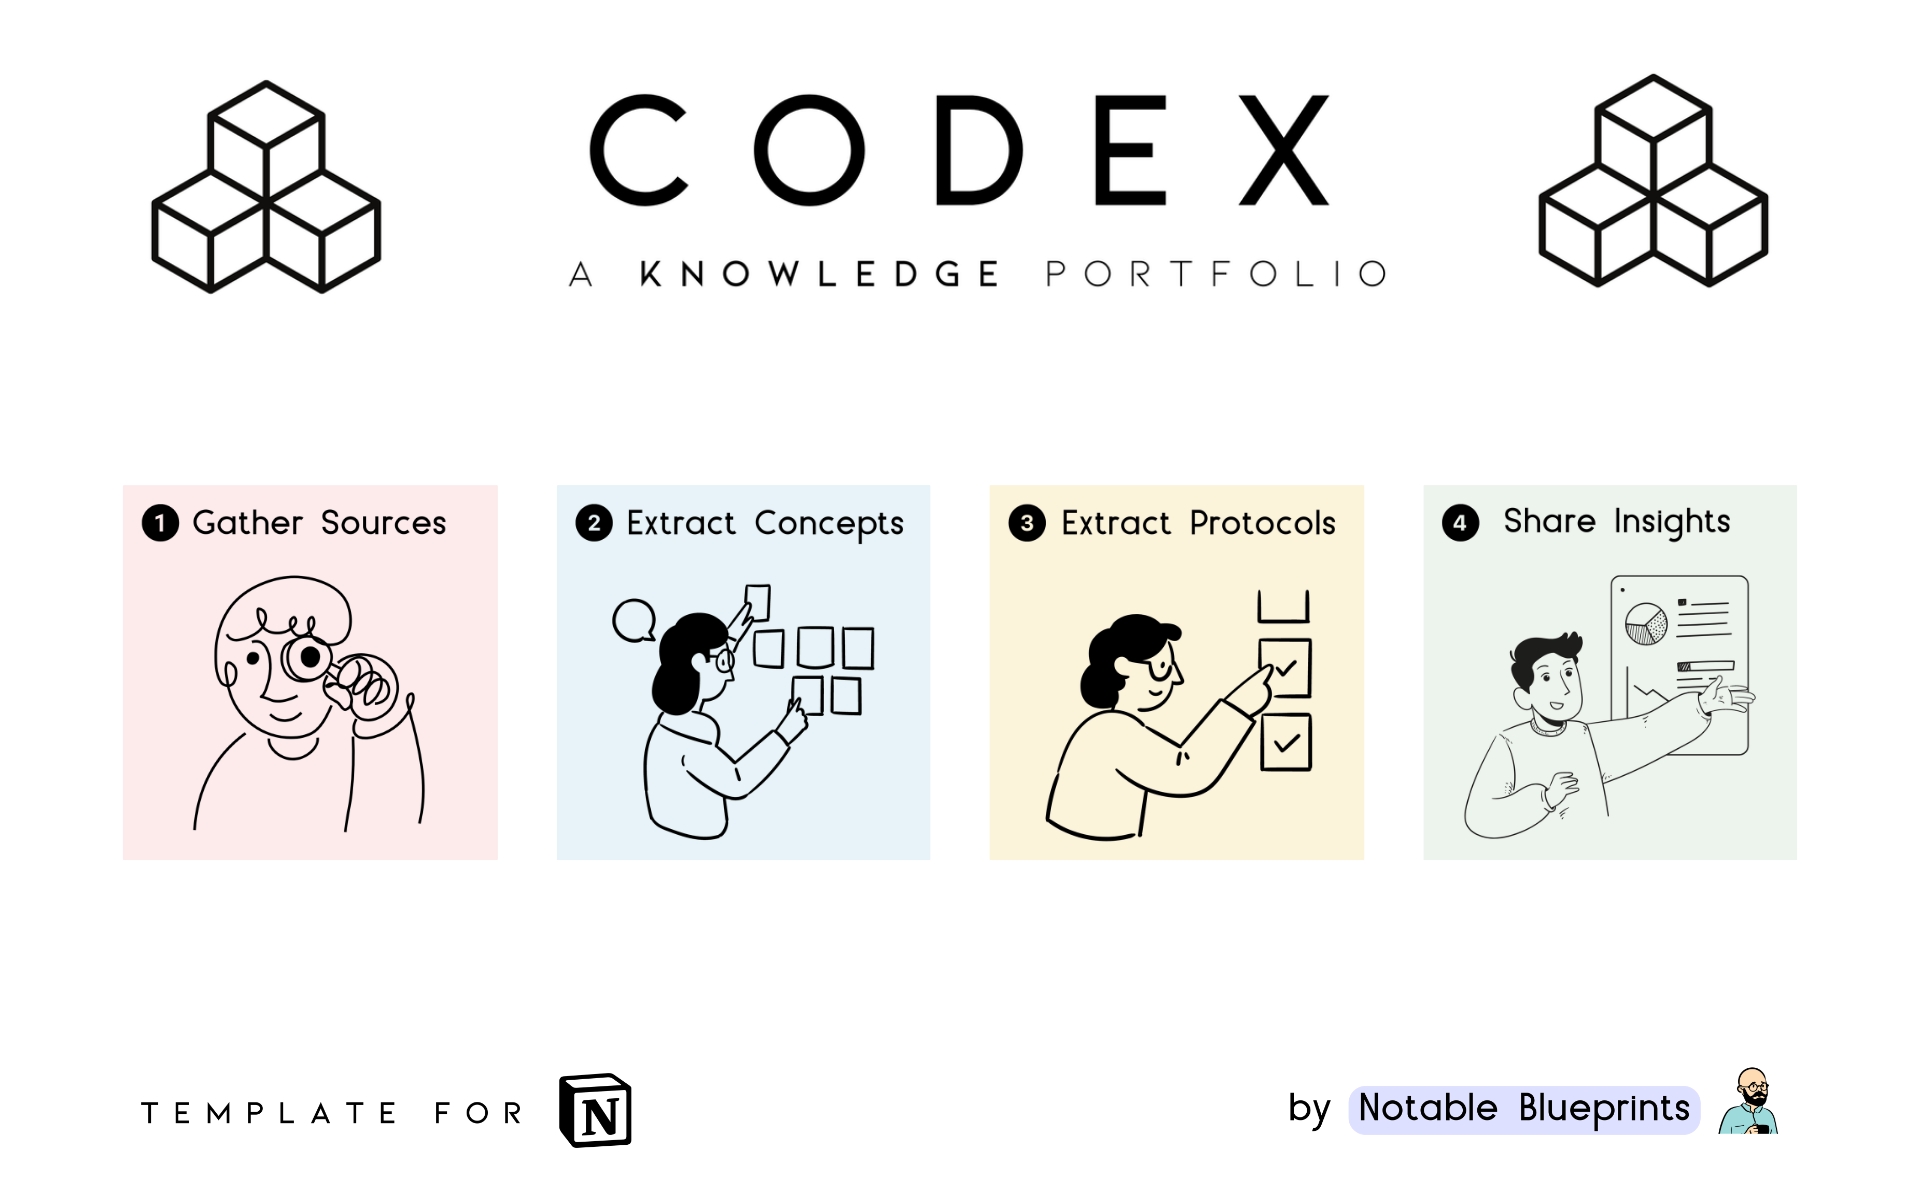 ⫷ CODEX ⫸ A Knowledge Portfolio님의 템플릿 미리보기